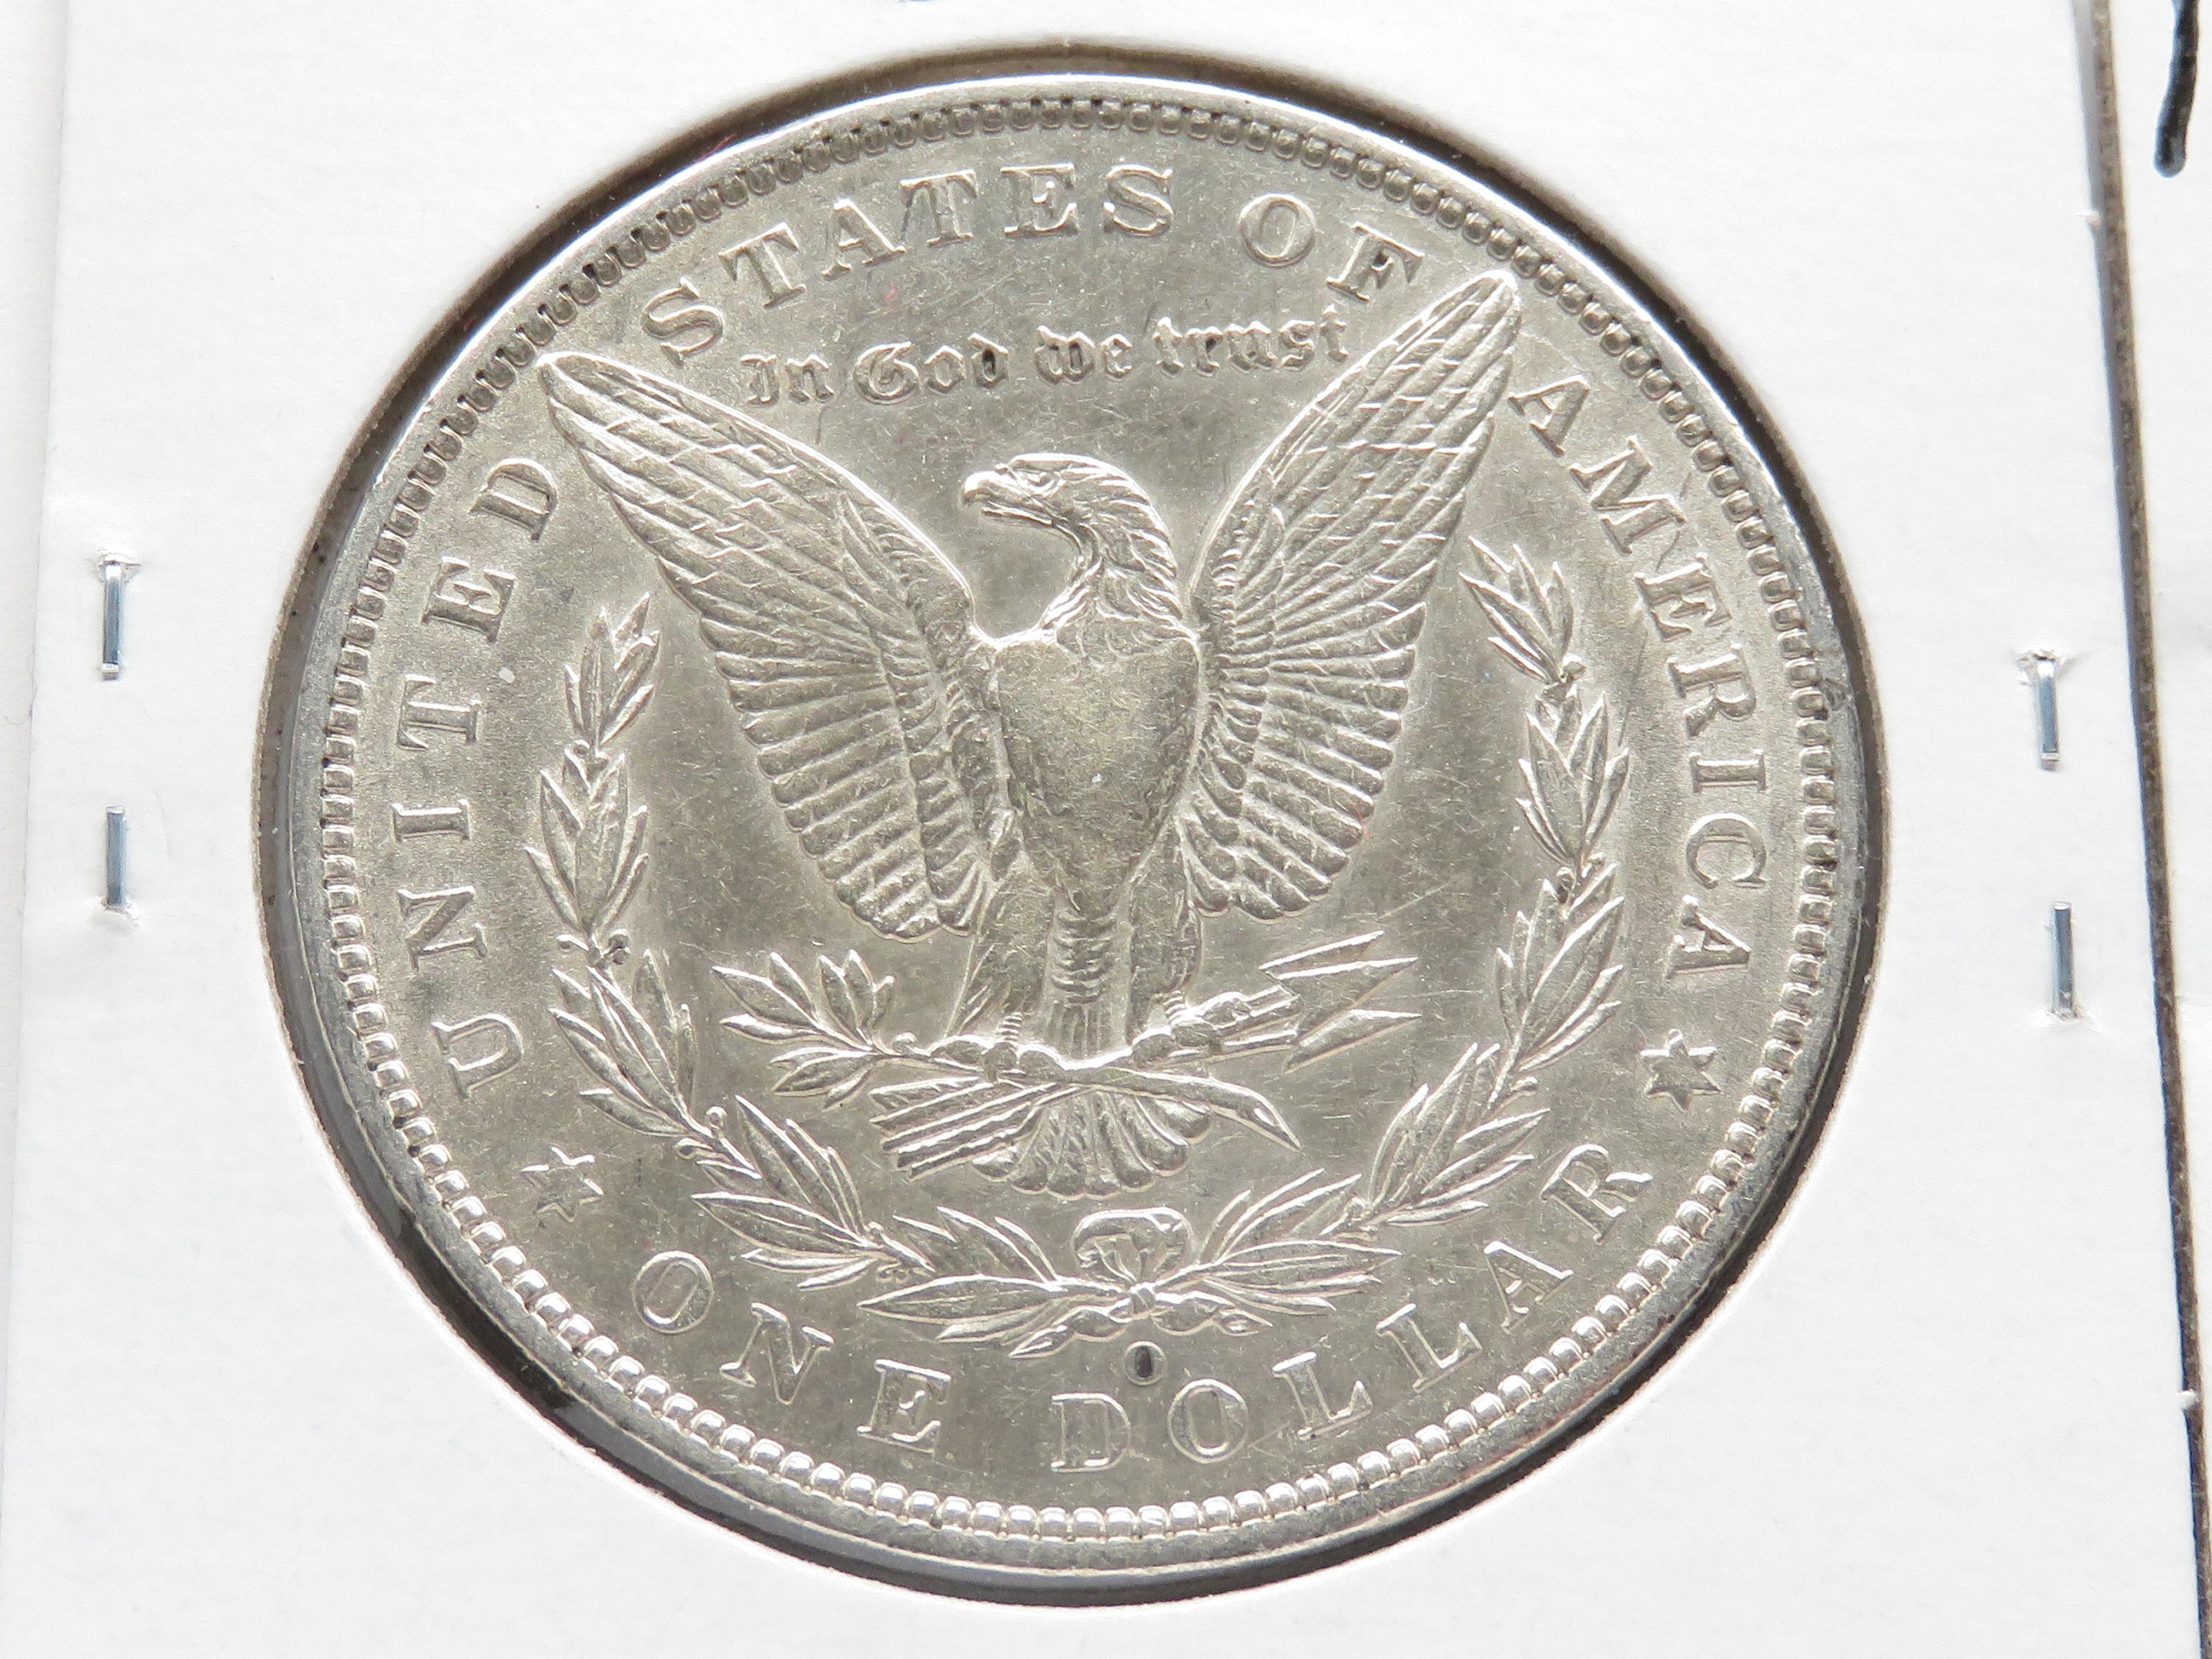 2 Morgan $: 1888-O AU clea, 1890 EF ?scrs clea